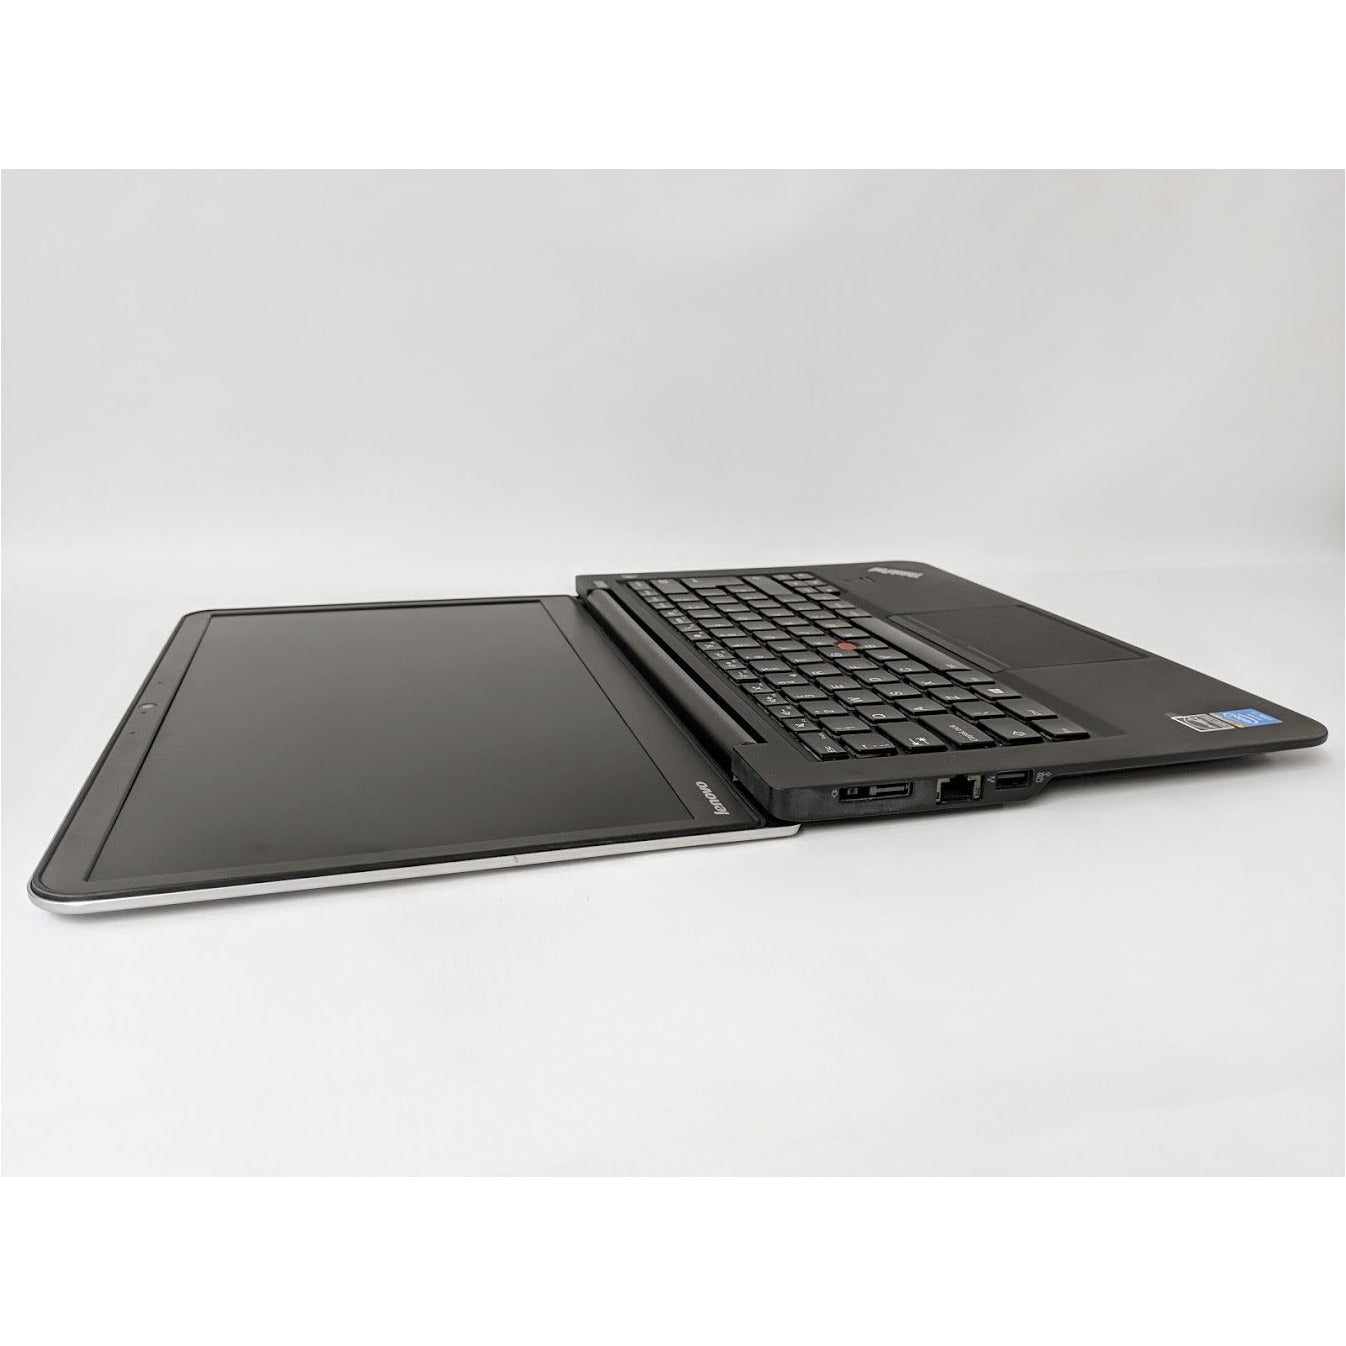 Refurbished Lenovo Thinkpad S440 Ultrabook i5-4200U 14